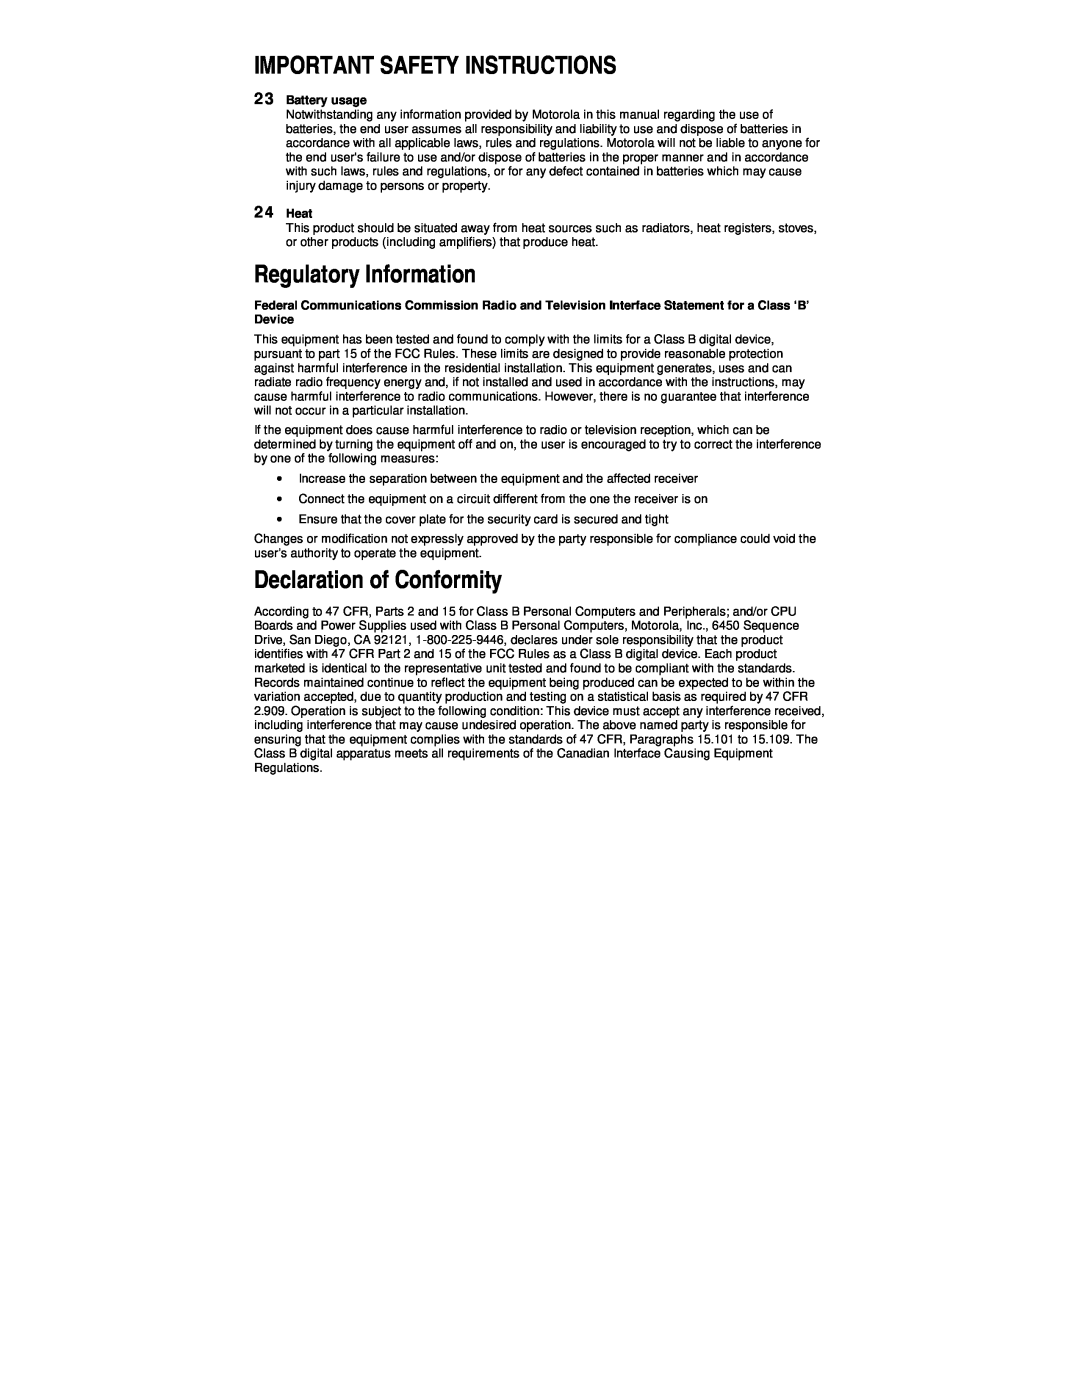 Motorola DCT6400 Regulatory Information, Declaration of Conformity, Important Safety Instructions, Battery usage, Heat 